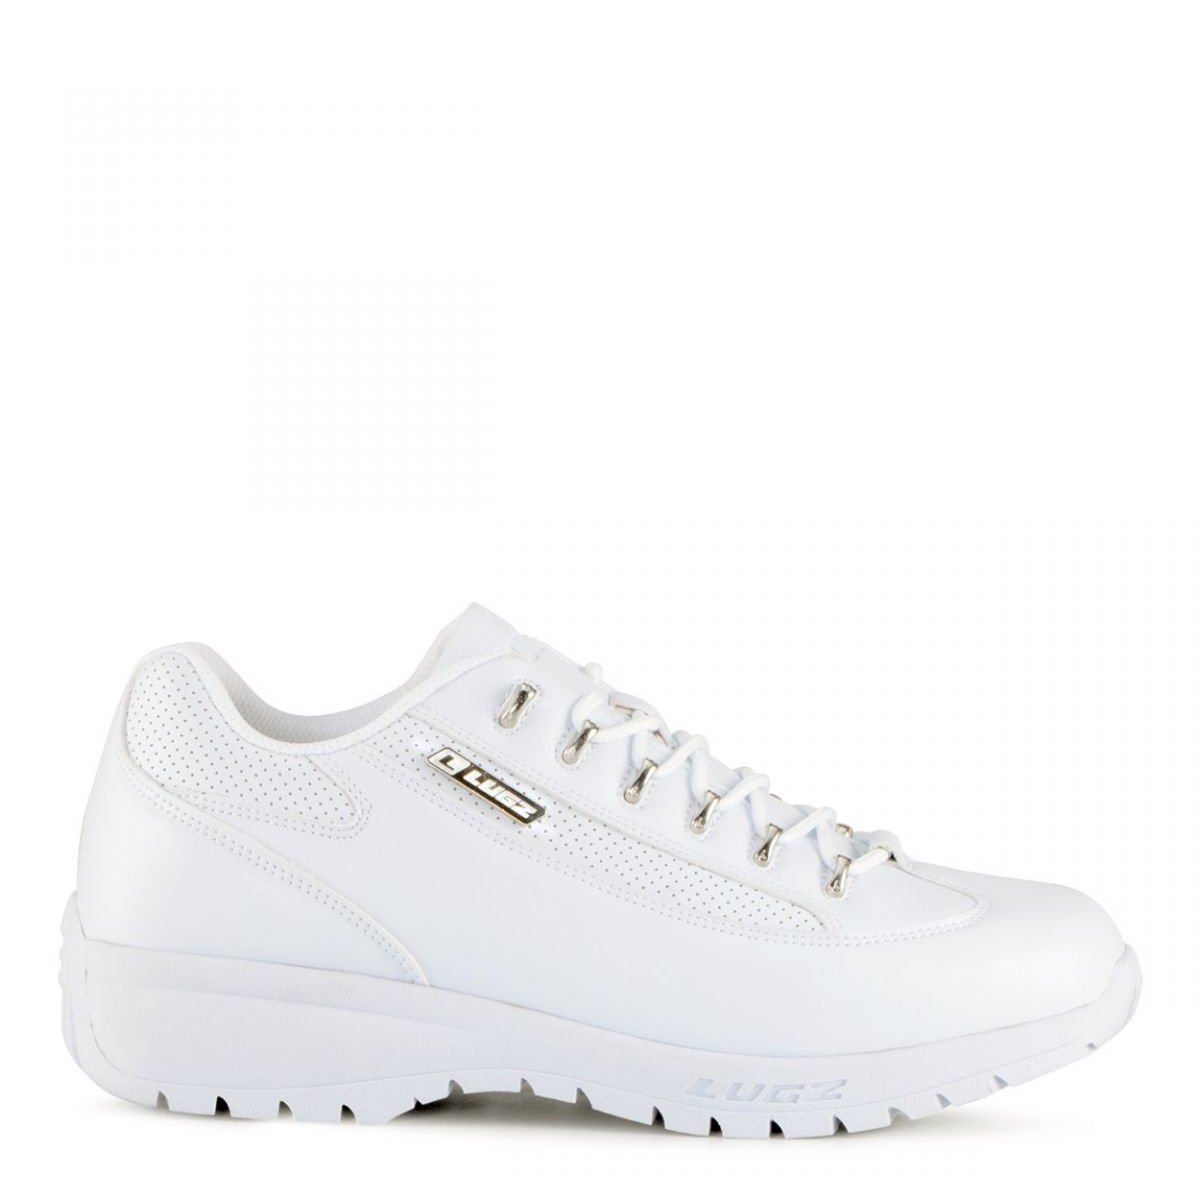 Lugz Men's Express Sneaker White - MEXPRSPV-100 WHITE - WHITE, 12